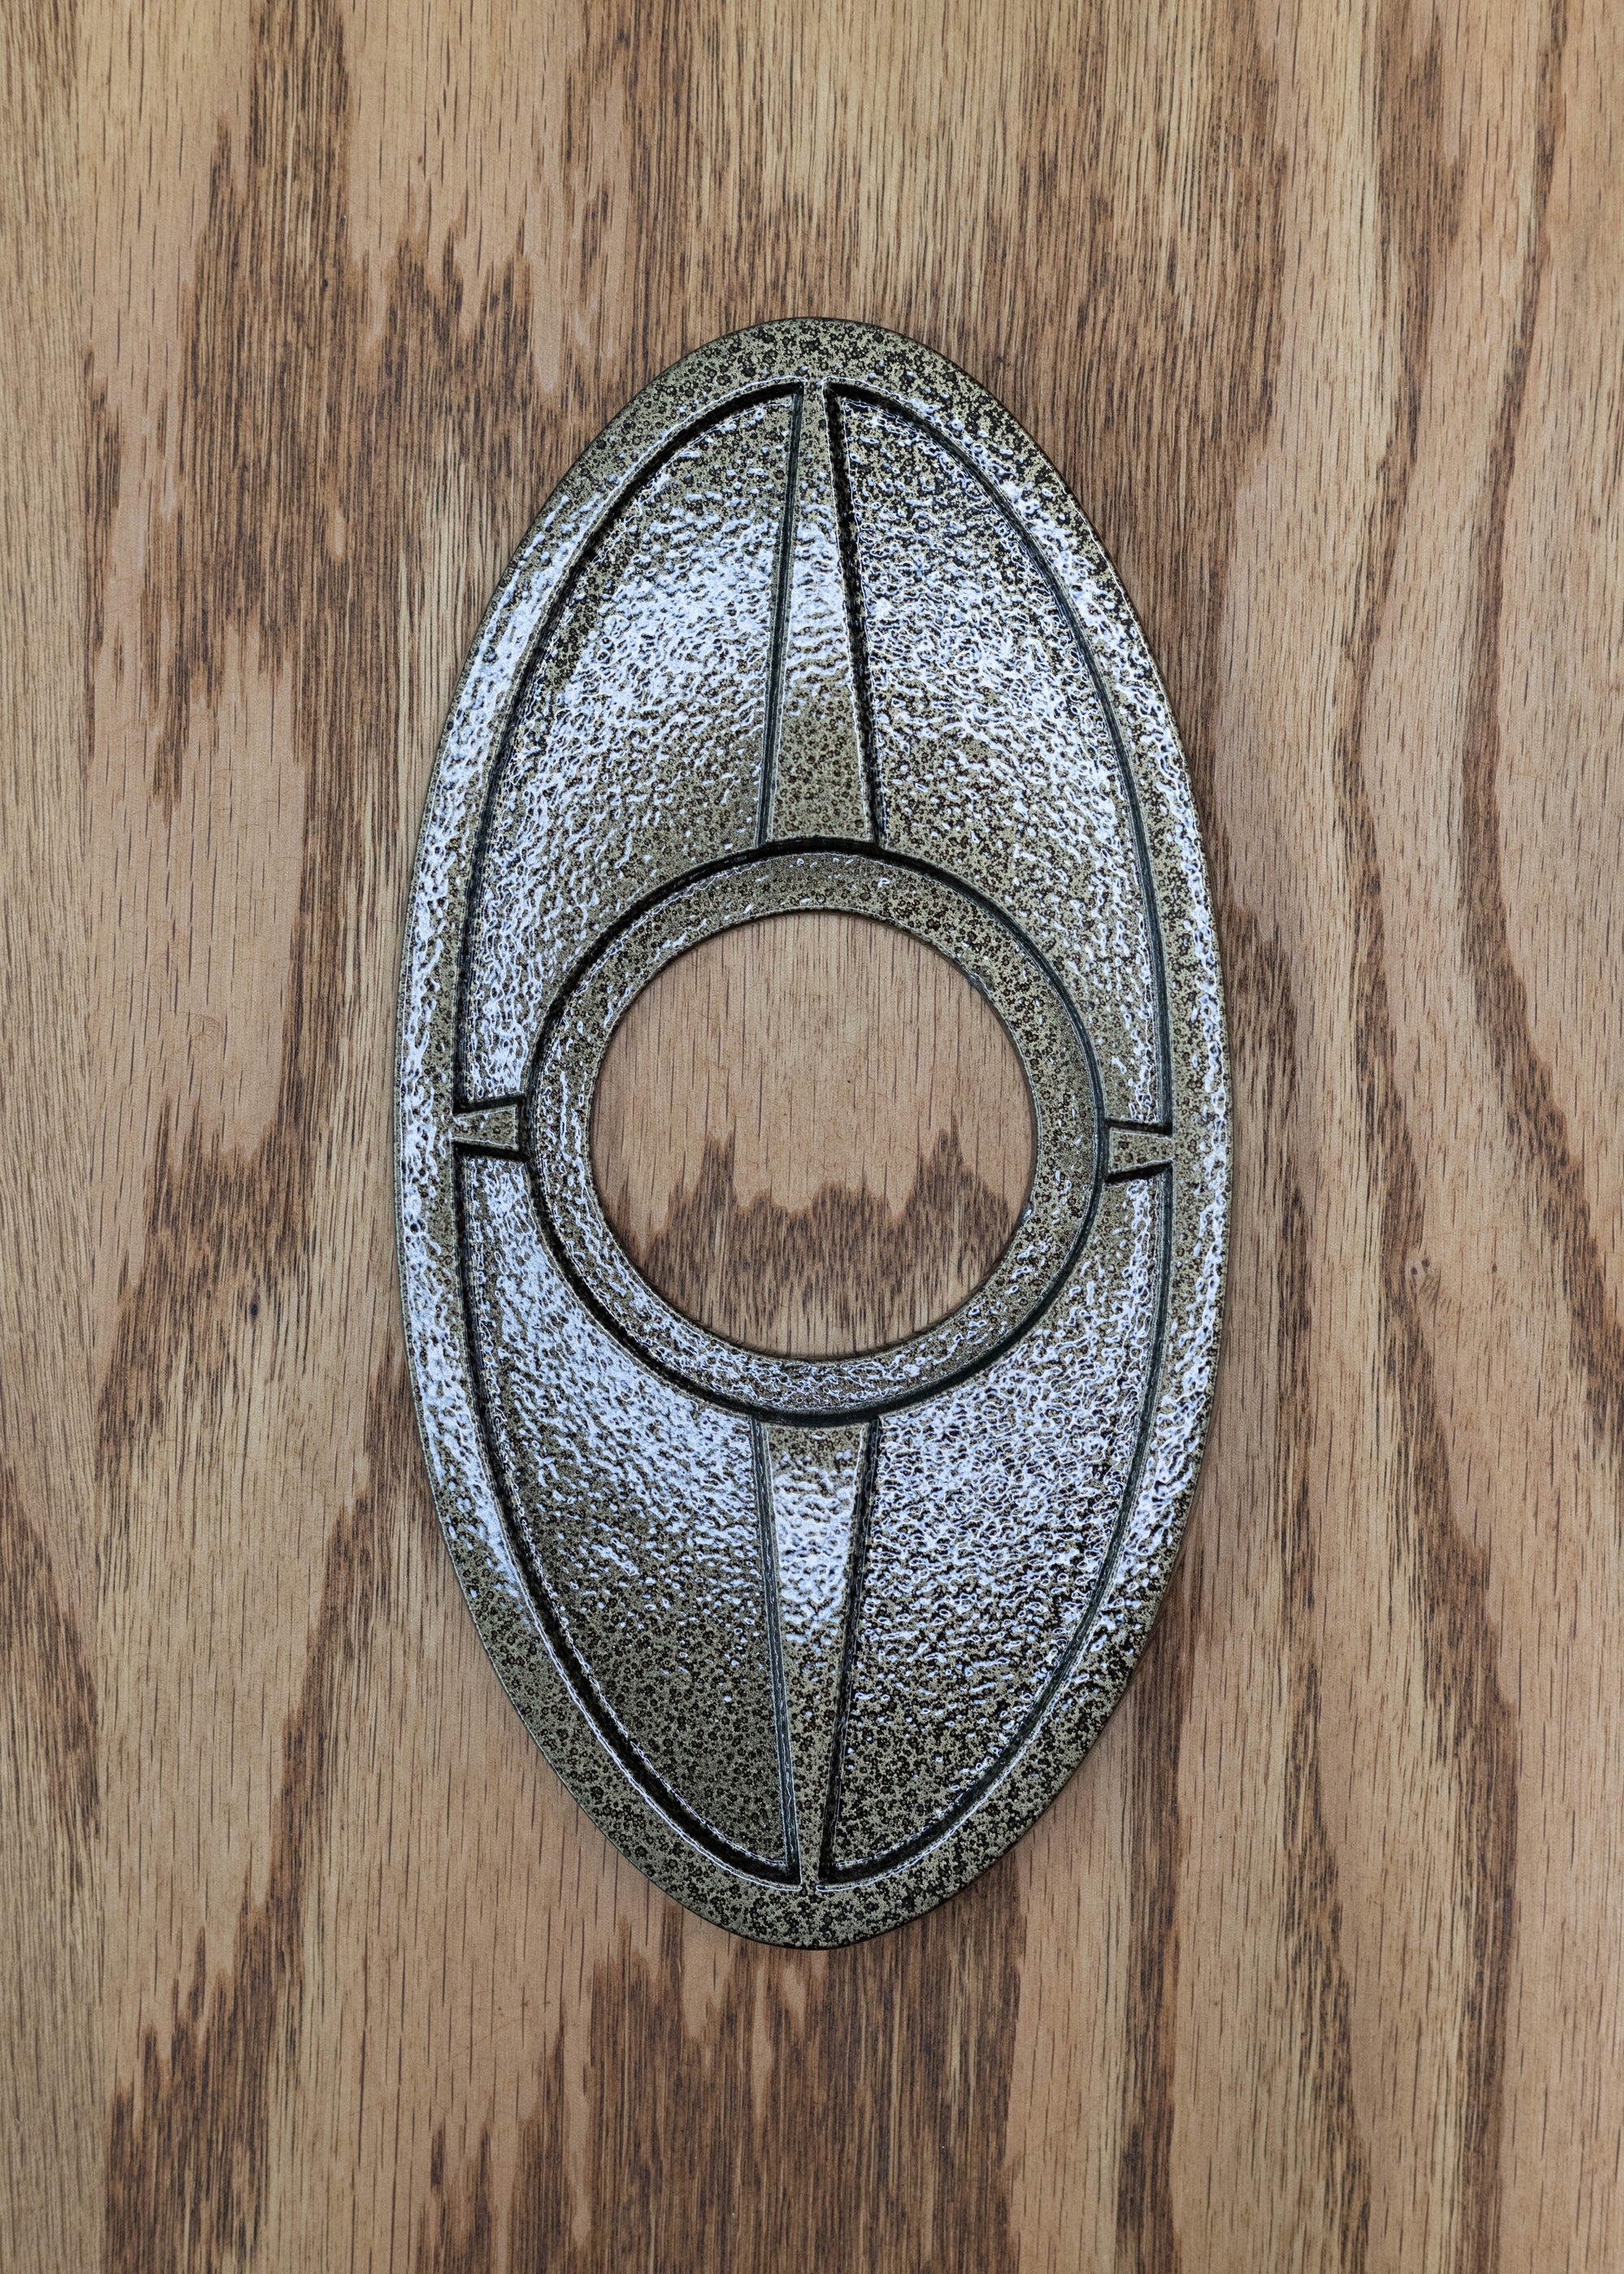 Odyssey Doorknob Escutcheon